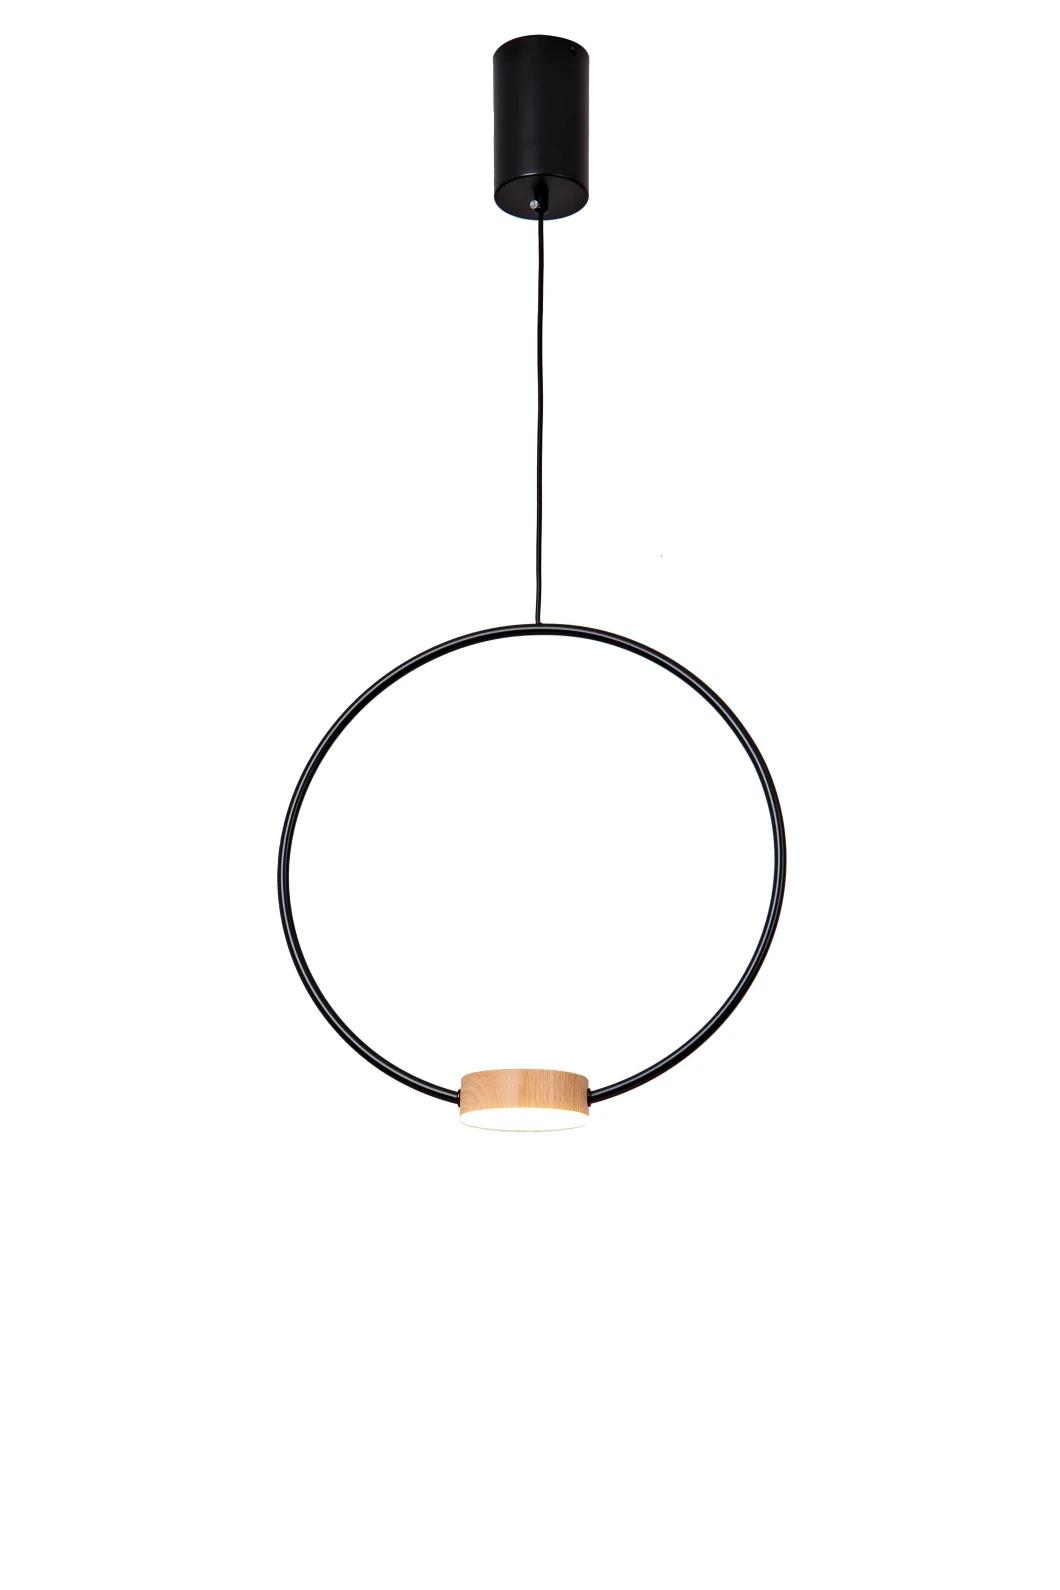 Masivel Lighting Modern Decorative C Shape LED Pendant Light of Indoor Chandelier Light